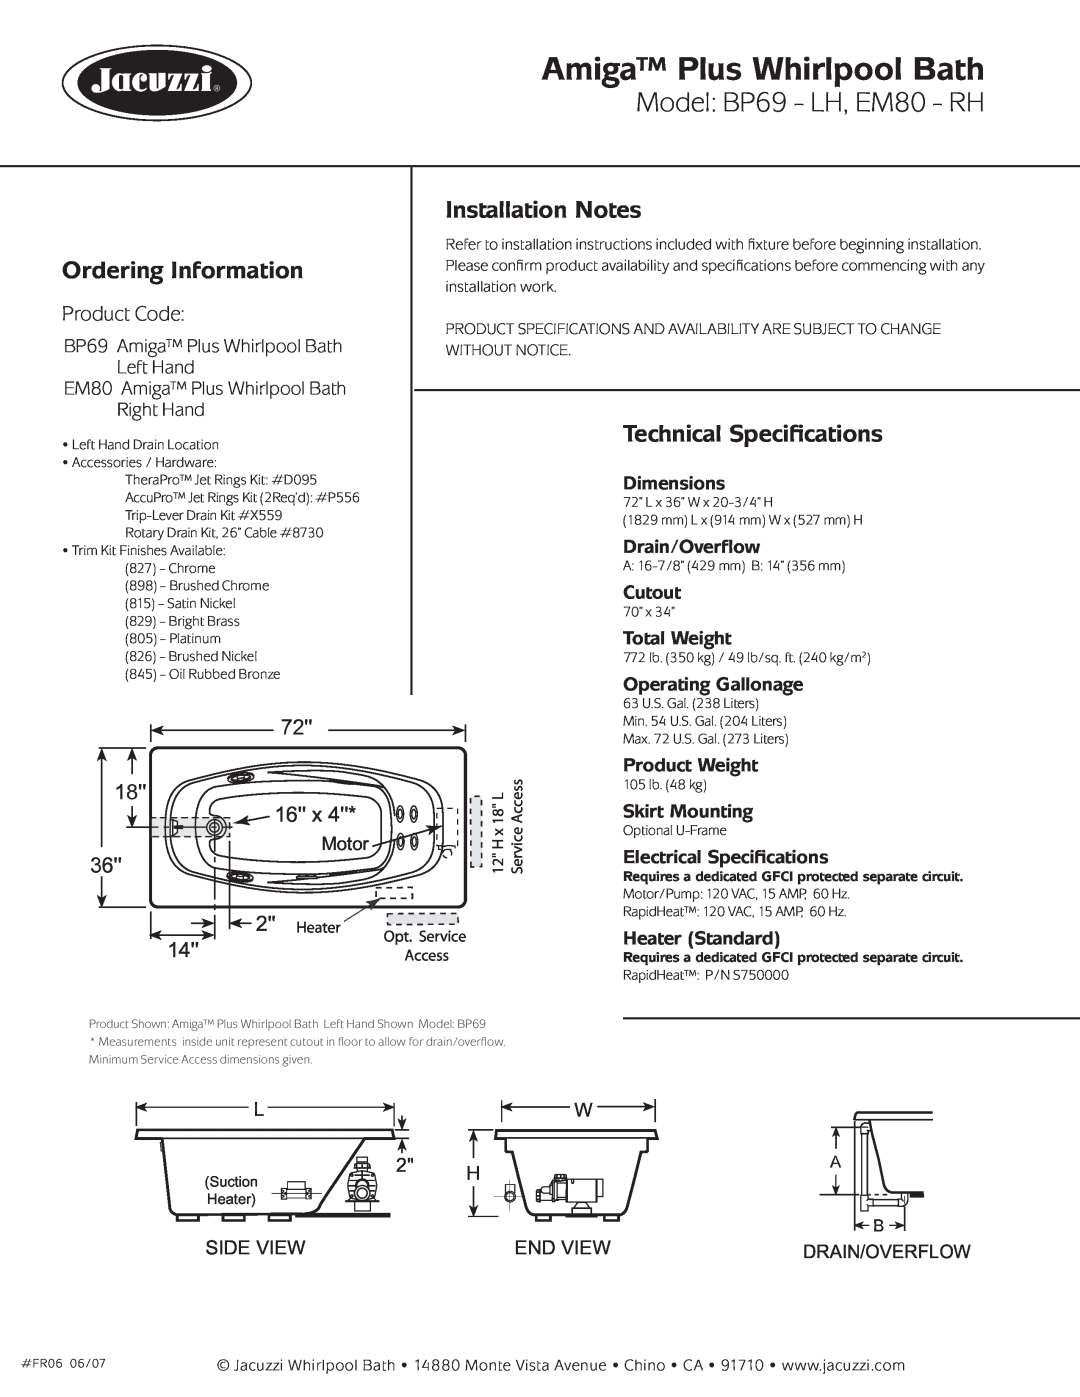 Jacuzzi Amiga Plus Whirlpool Bath, Model: BP69 - LH, EM80 - RH, Ordering Information, Installation Notes, Product Code 